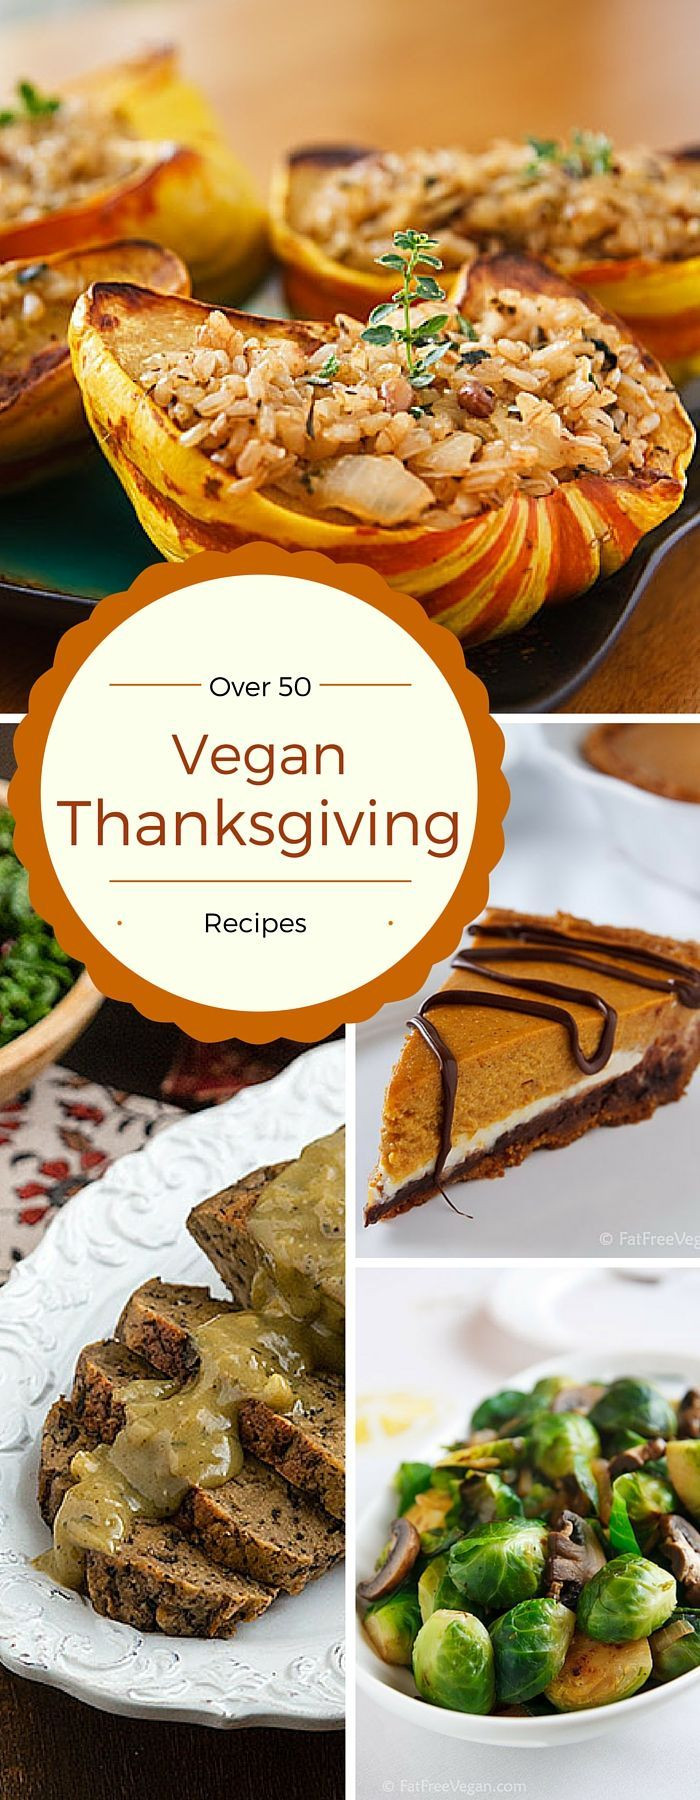 Vegetarian Recipes Thanksgiving
 25 best ideas about Vegan Thanksgiving on Pinterest